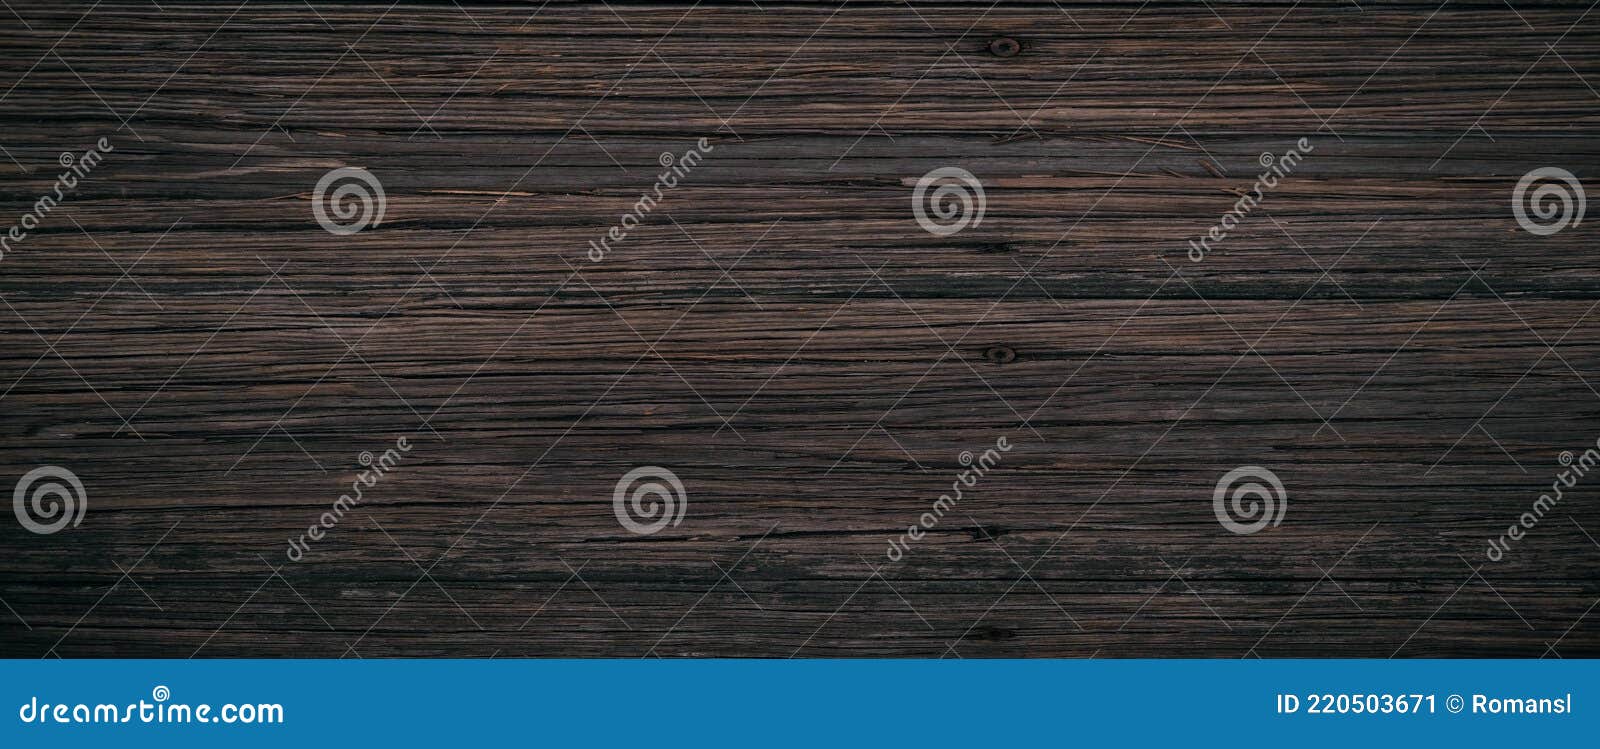 dark wood background, old black wood texture for background